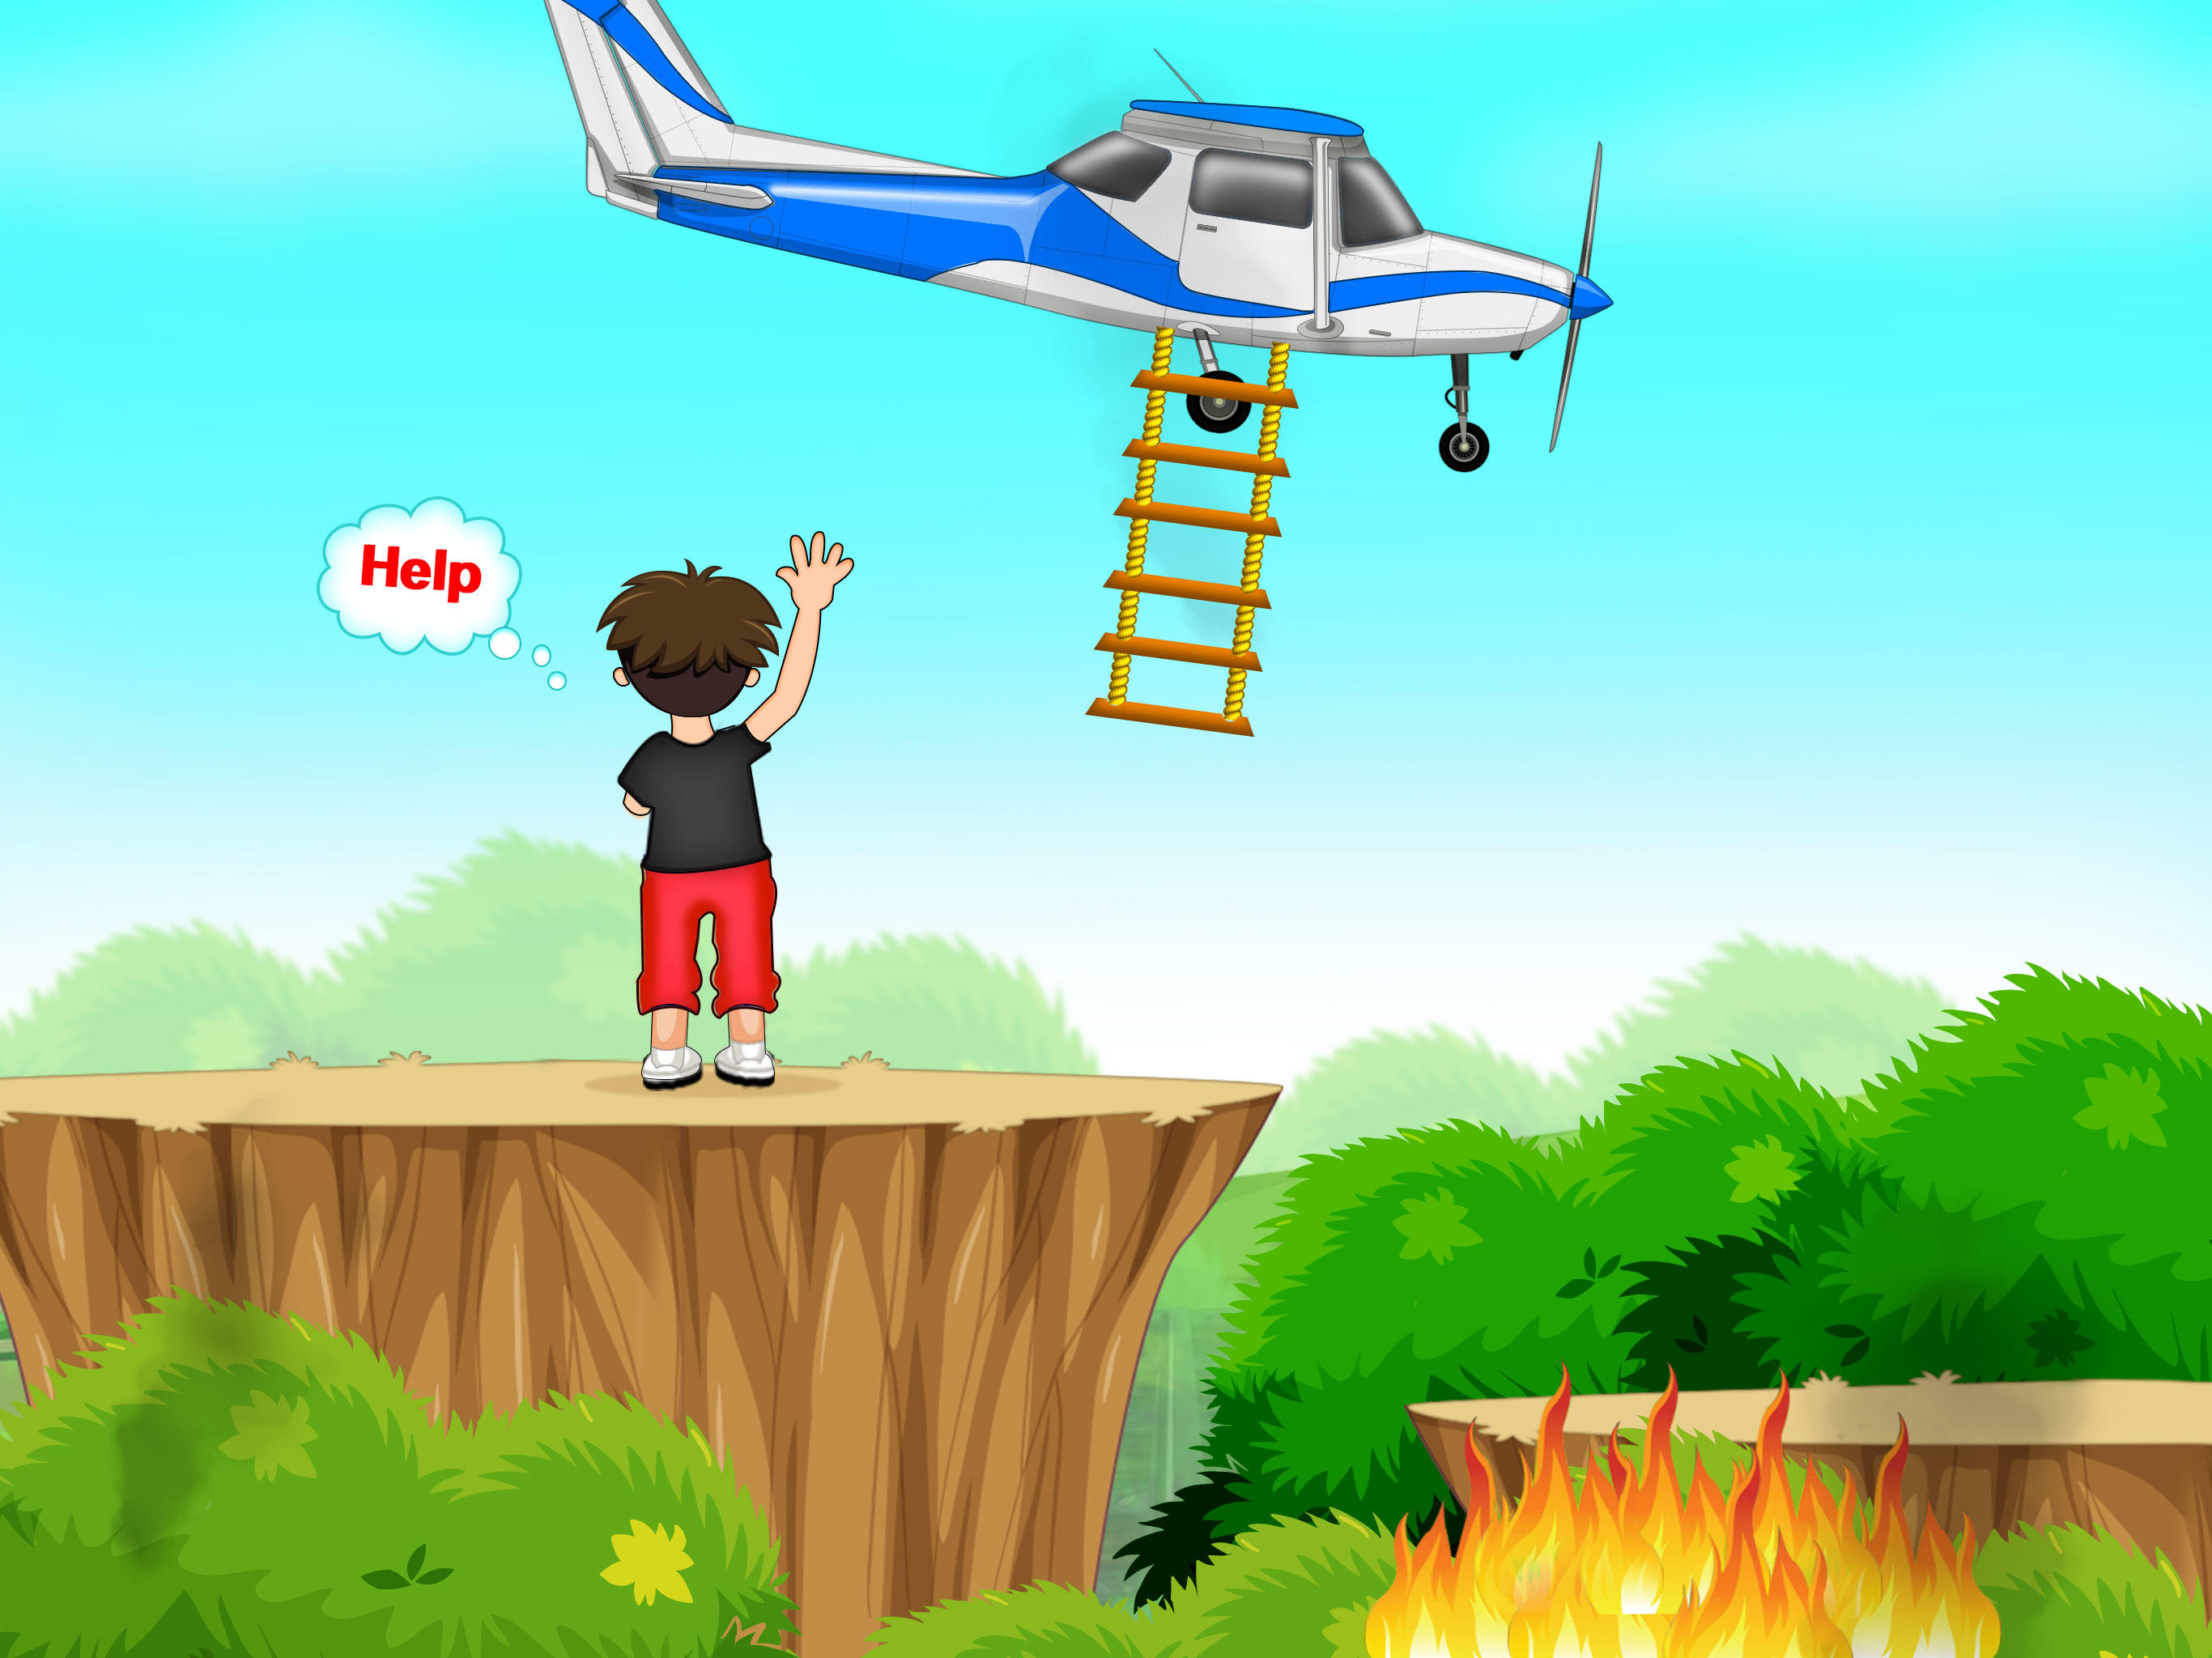 FENIX SQUADRON: jogos de avião android iOS apk download for free-TapTap